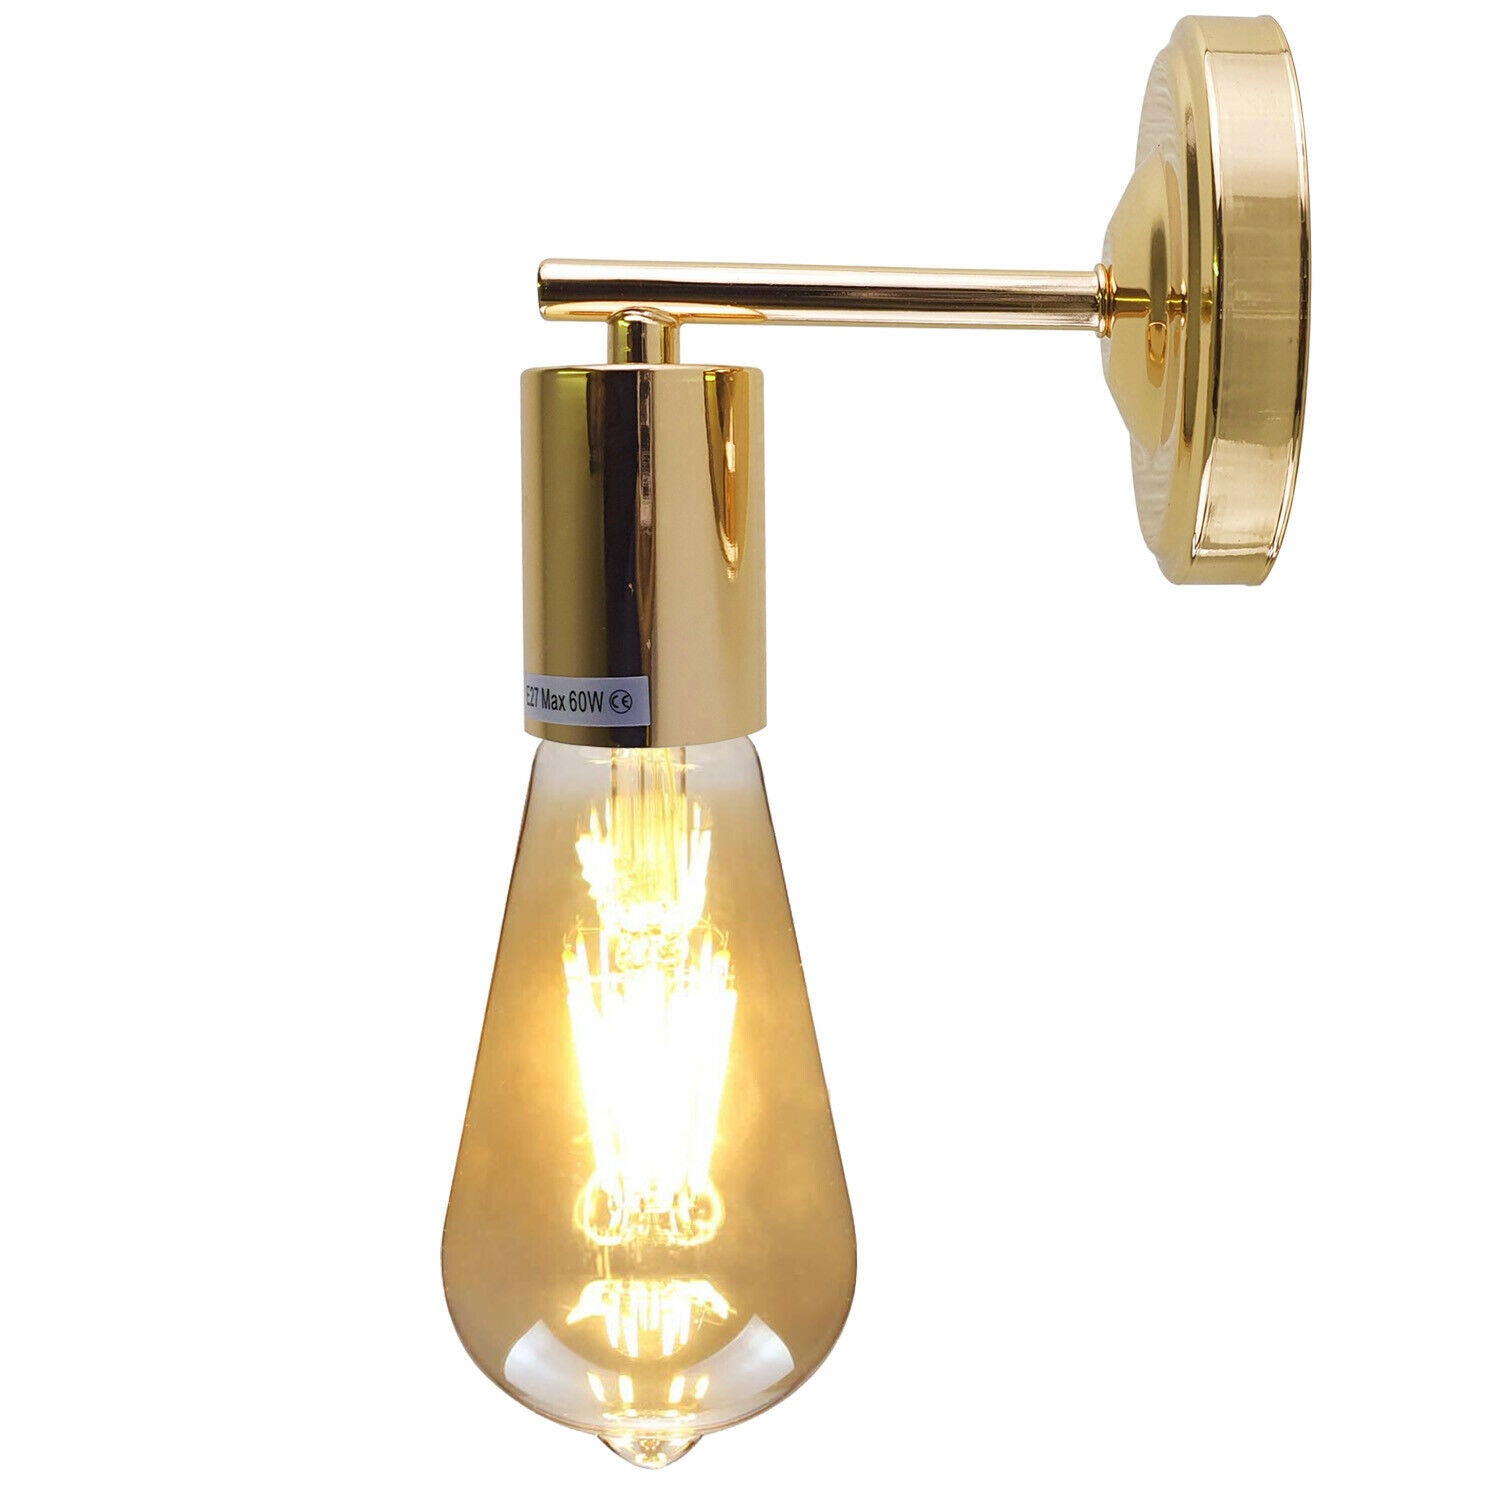 French Gold Industrial Vintage Retro Metallic Sconce Wall Light Lamp Fitting~1691 - LEDSone UK Ltd